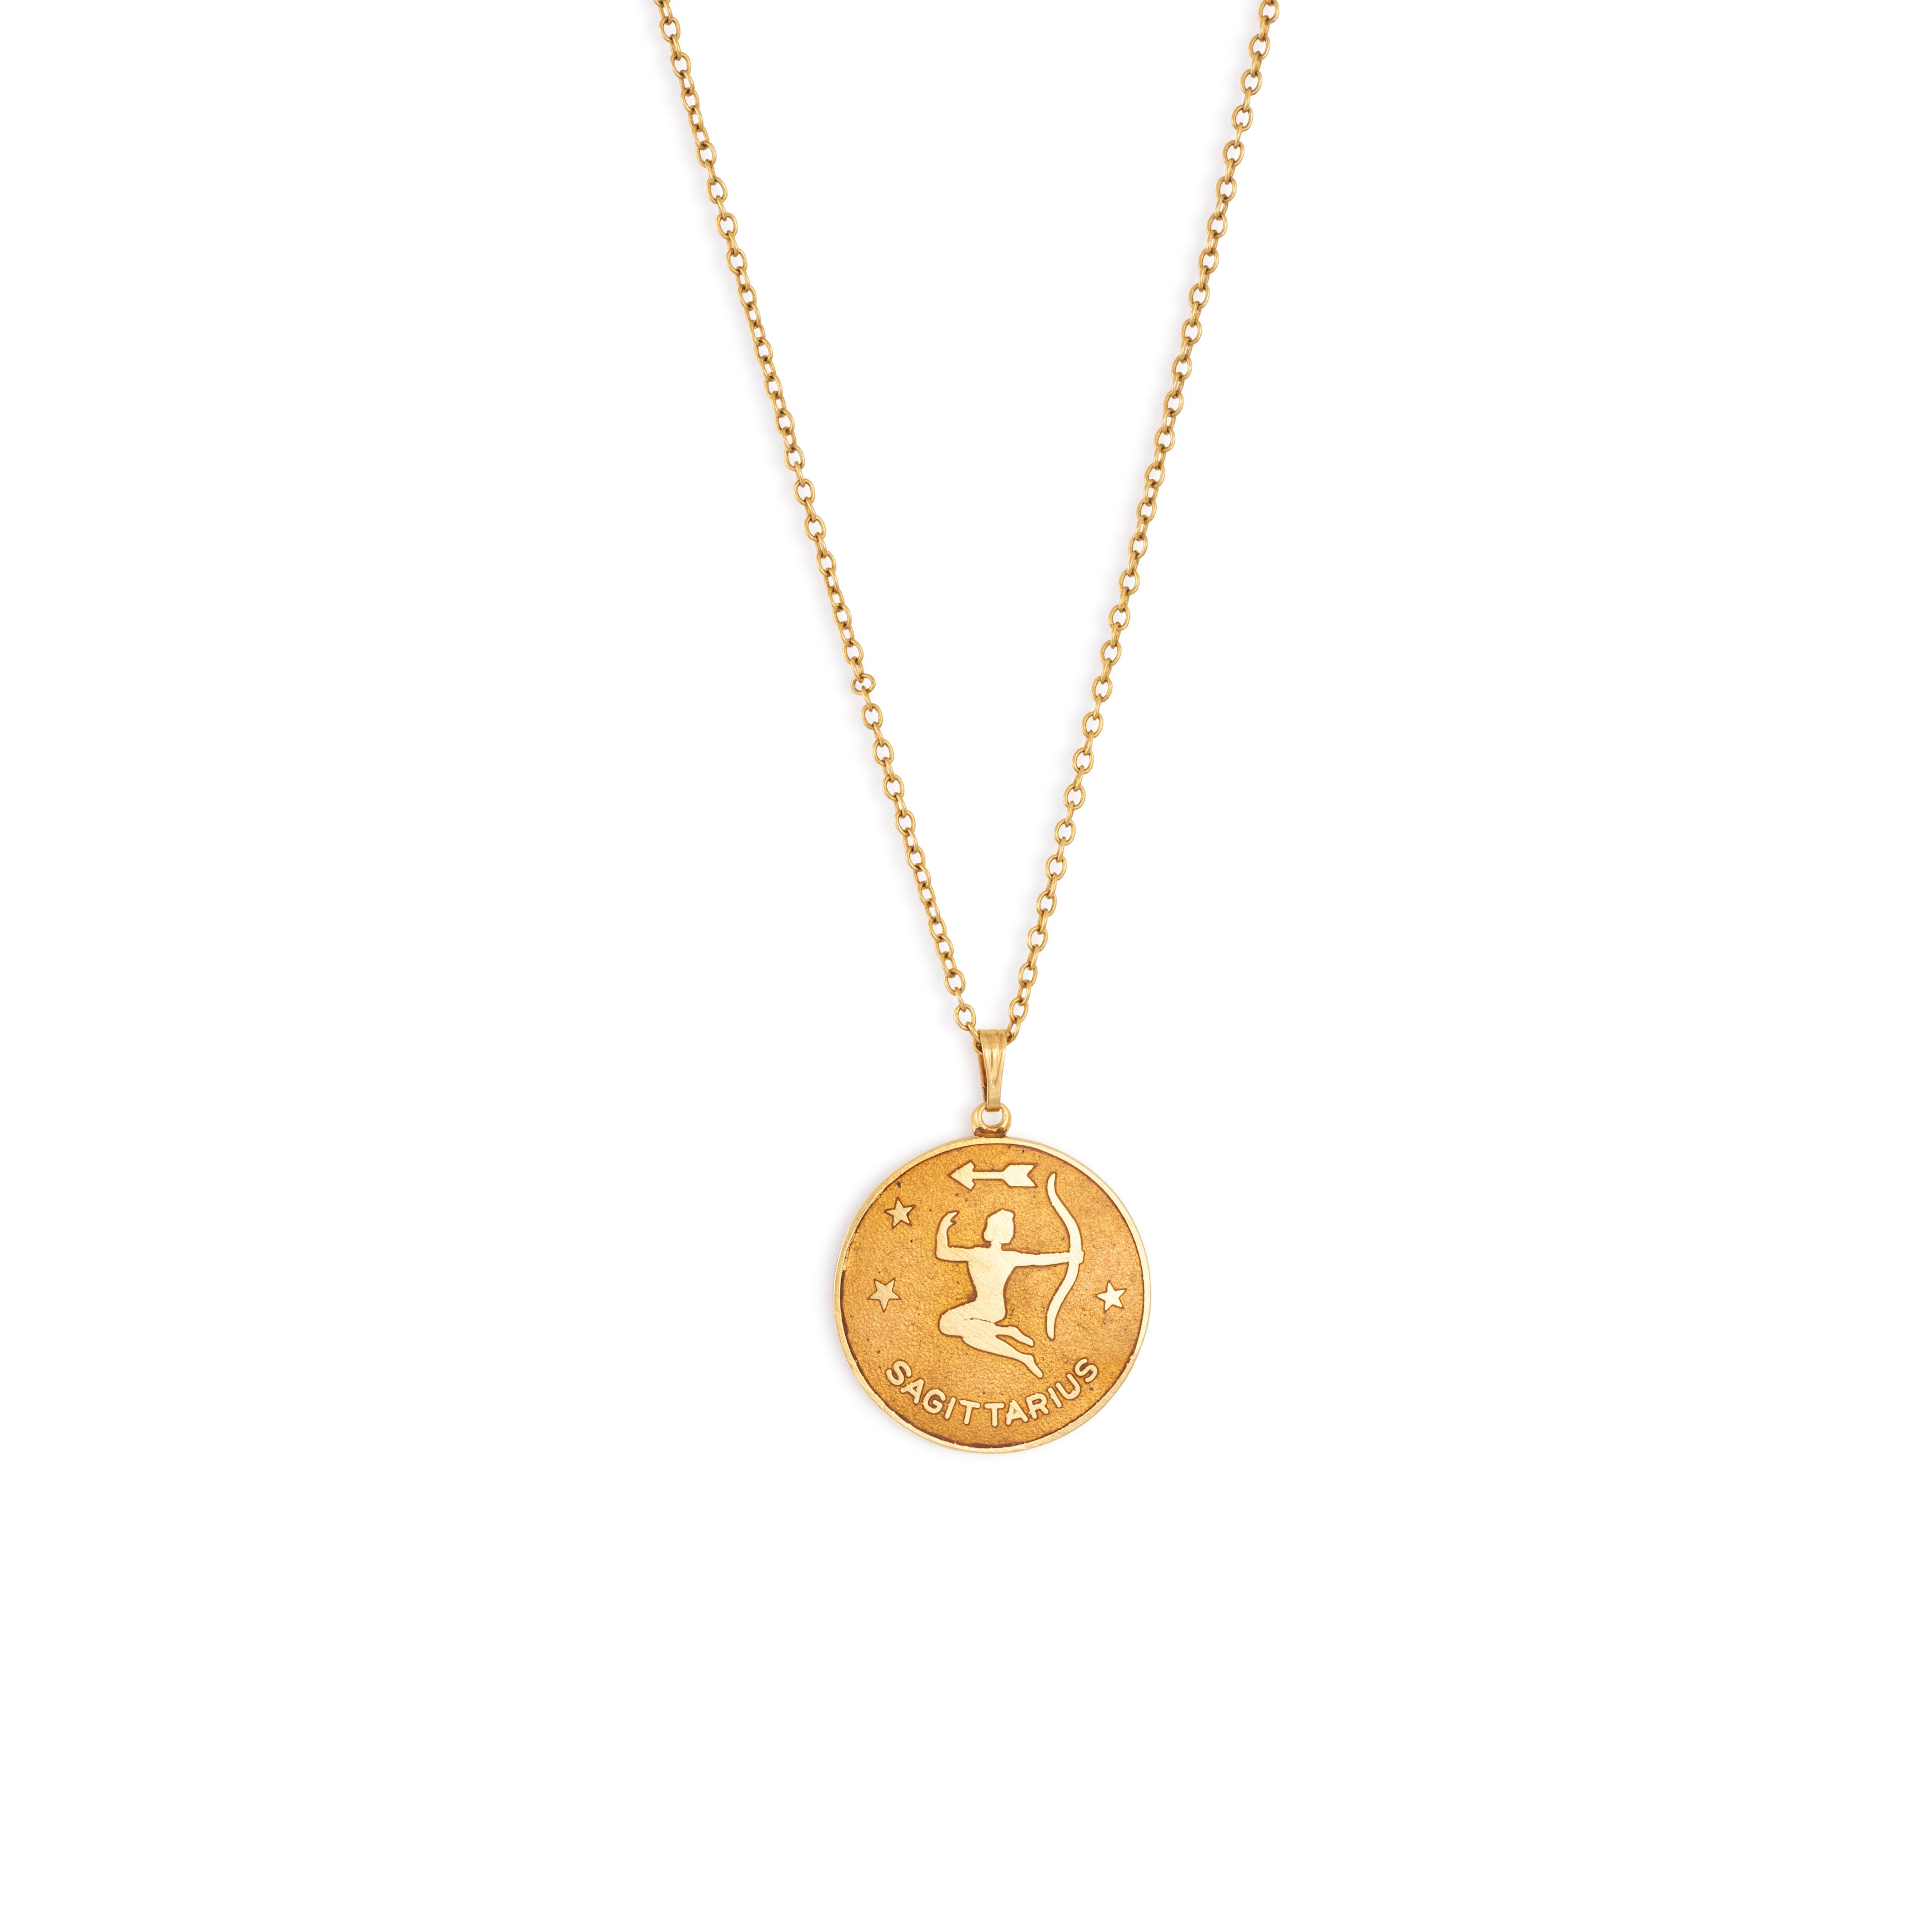 Zodiac gold pendant with rolo chain